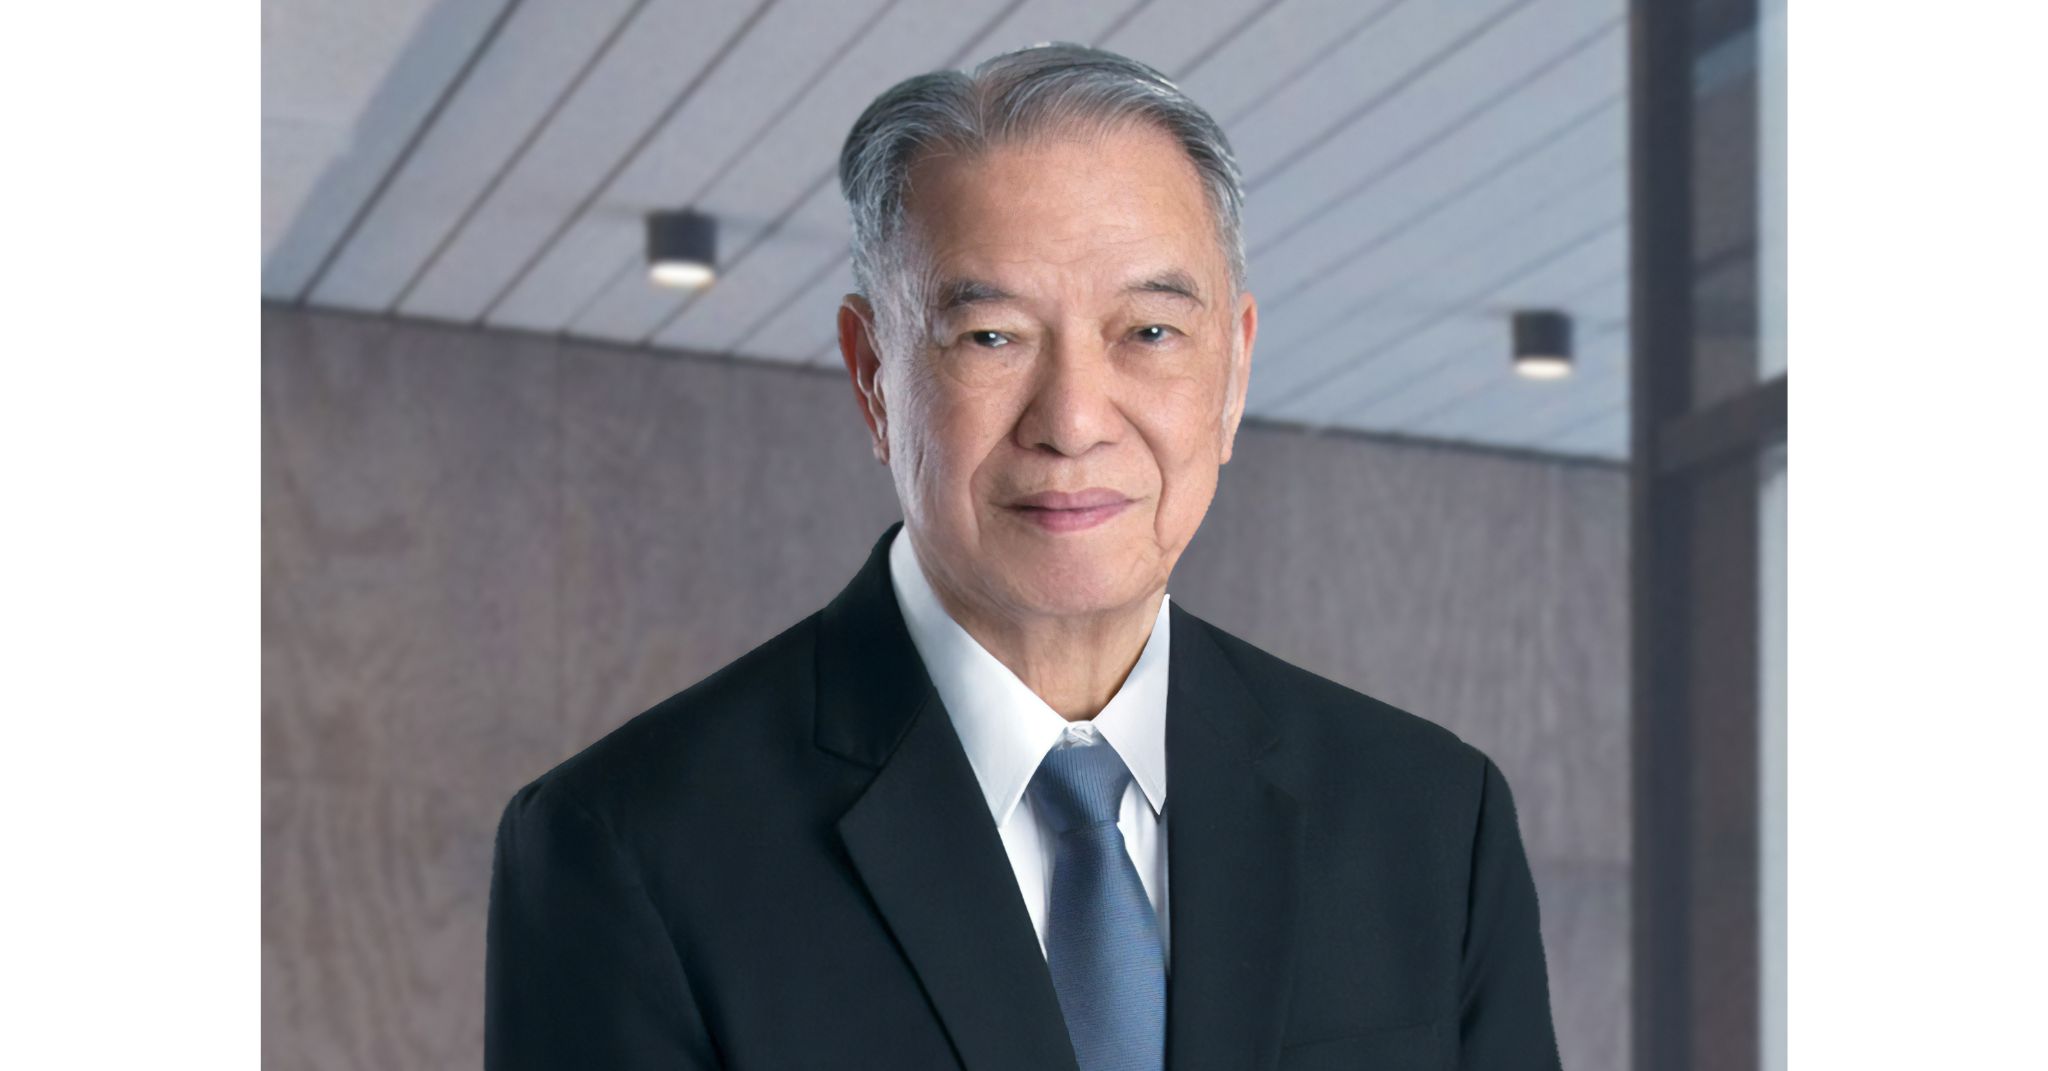 Dr. Lucio Tan is now chairman emeritus of PNB